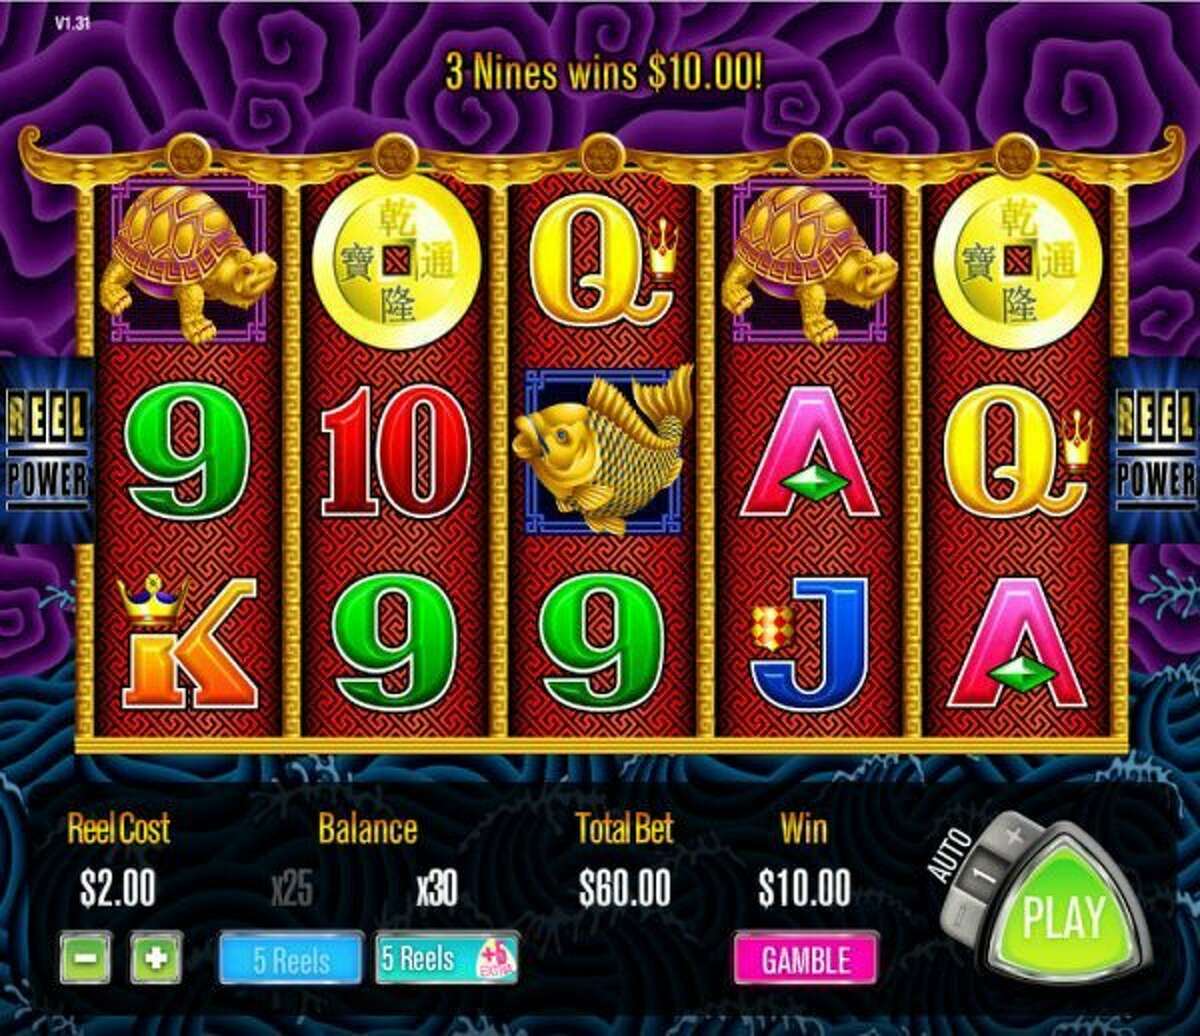 buffalo gold slot machine graton casino